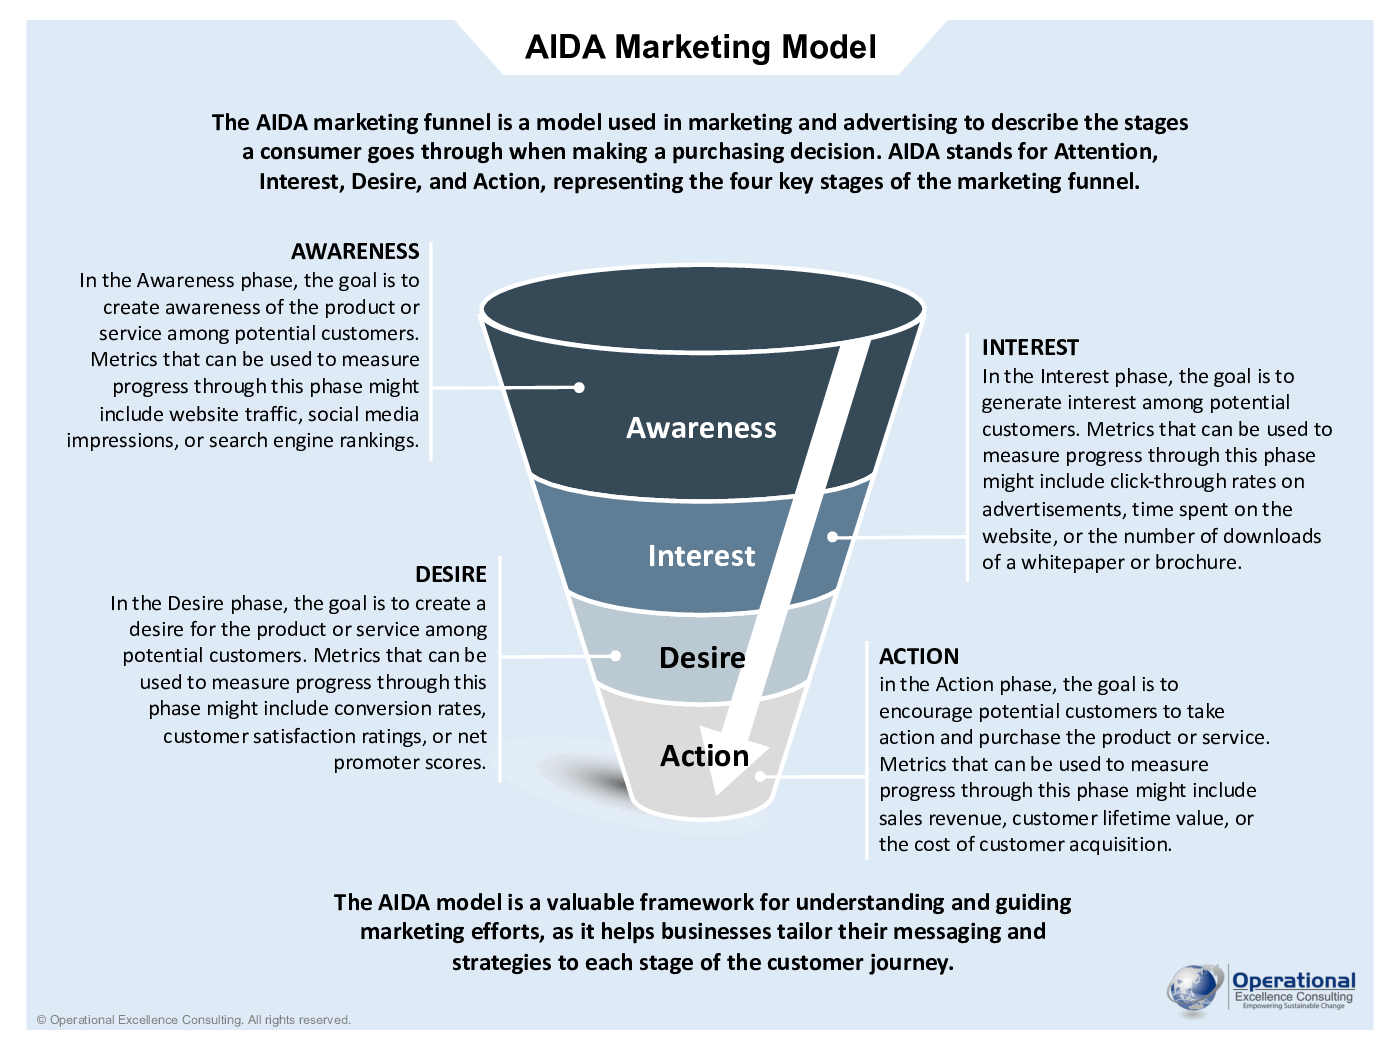 AIDA Marketing Model Poster